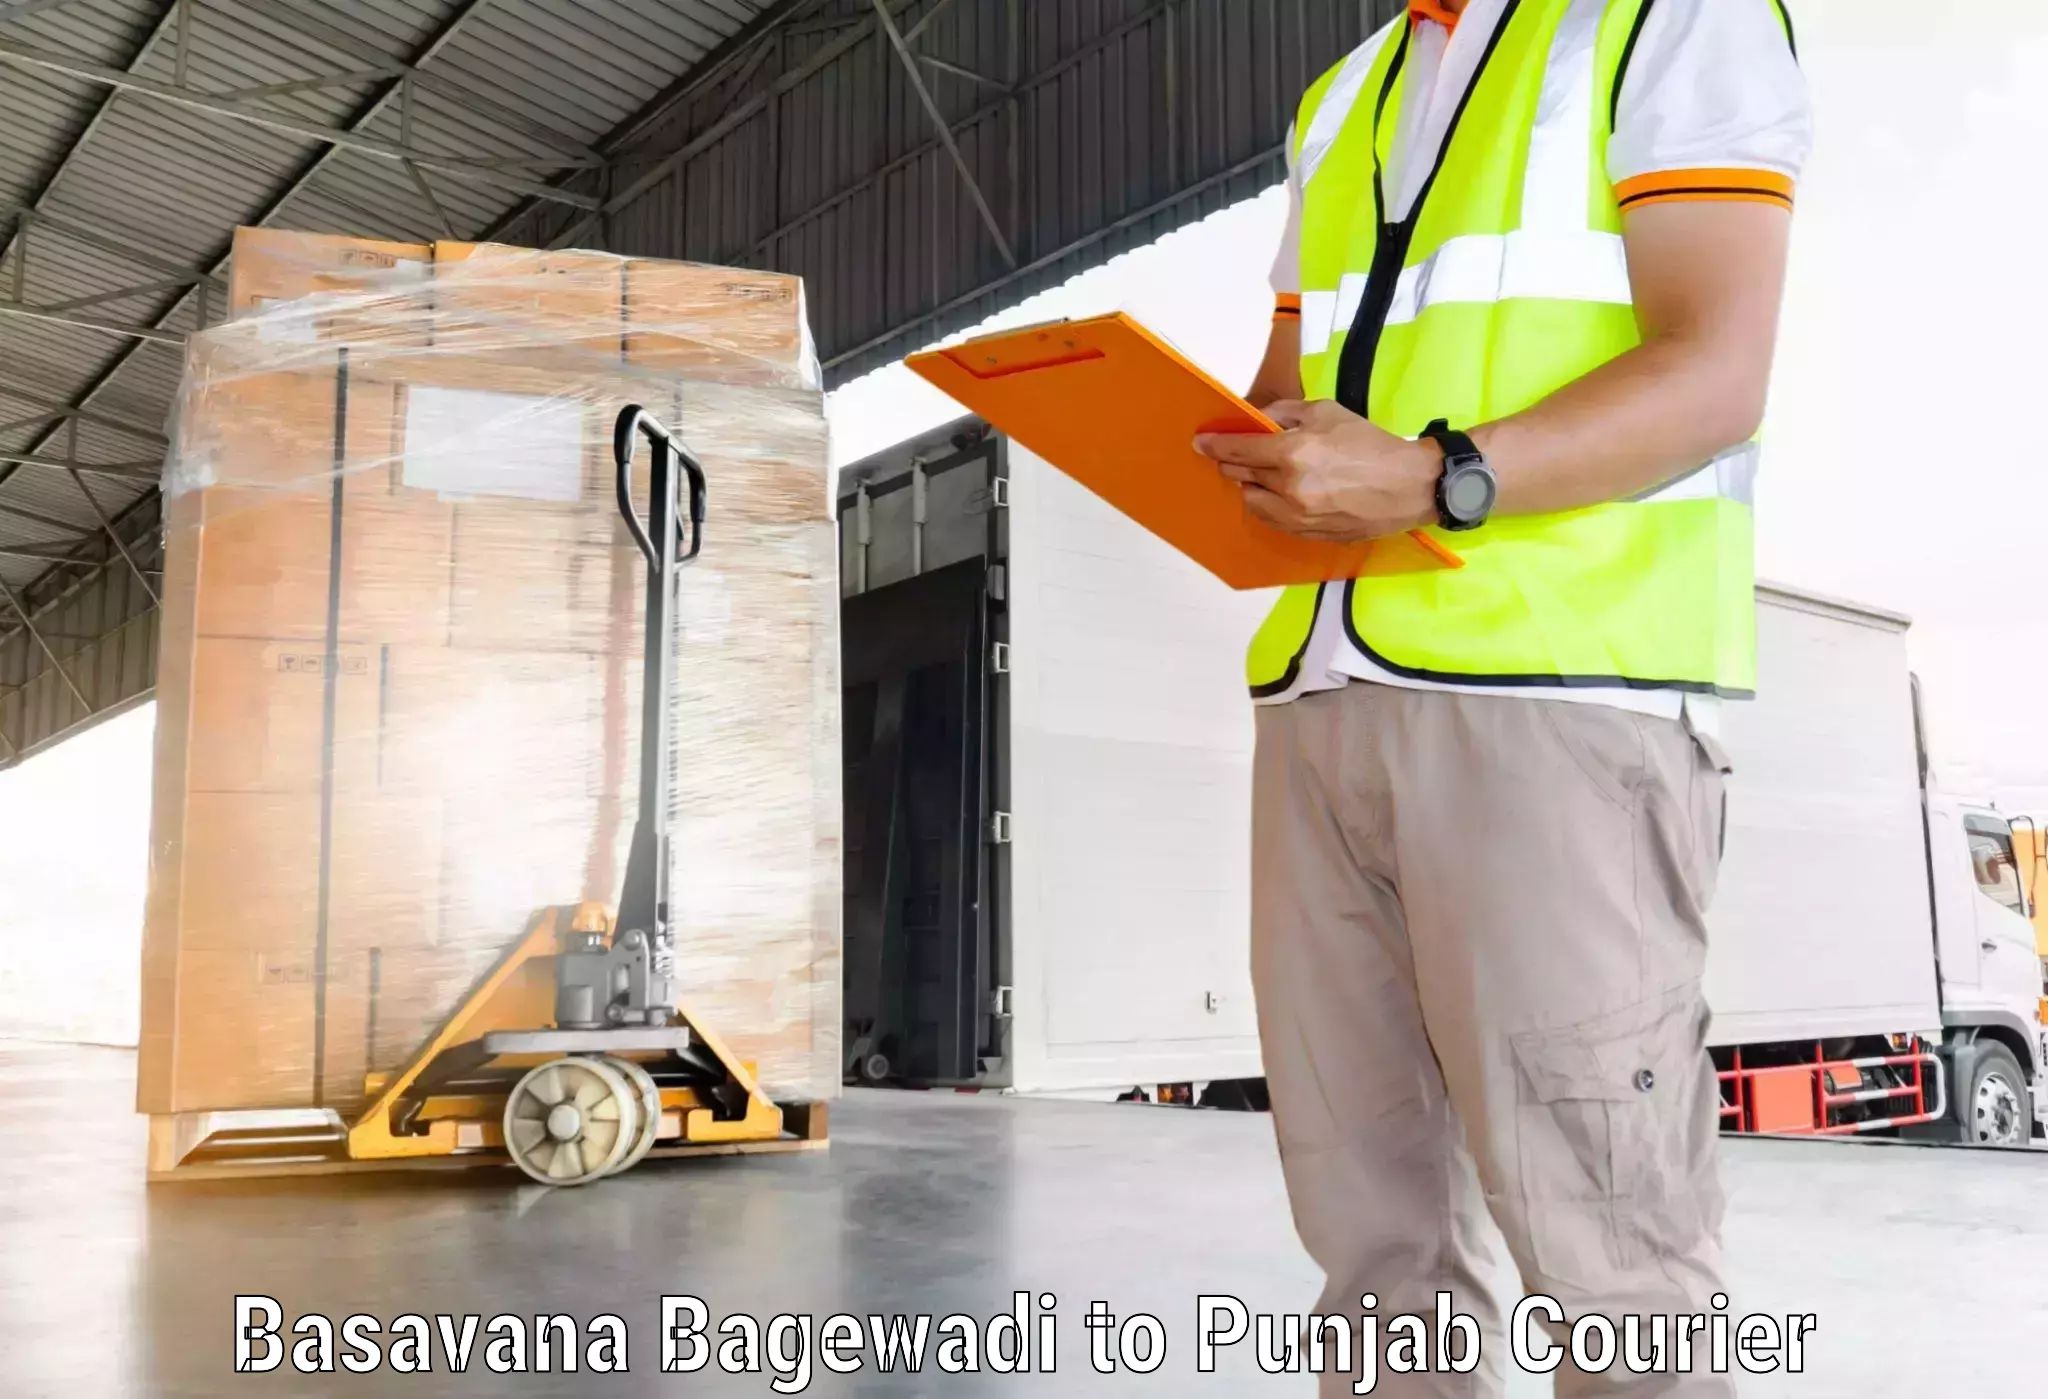 Modern courier technology Basavana Bagewadi to Nakodar